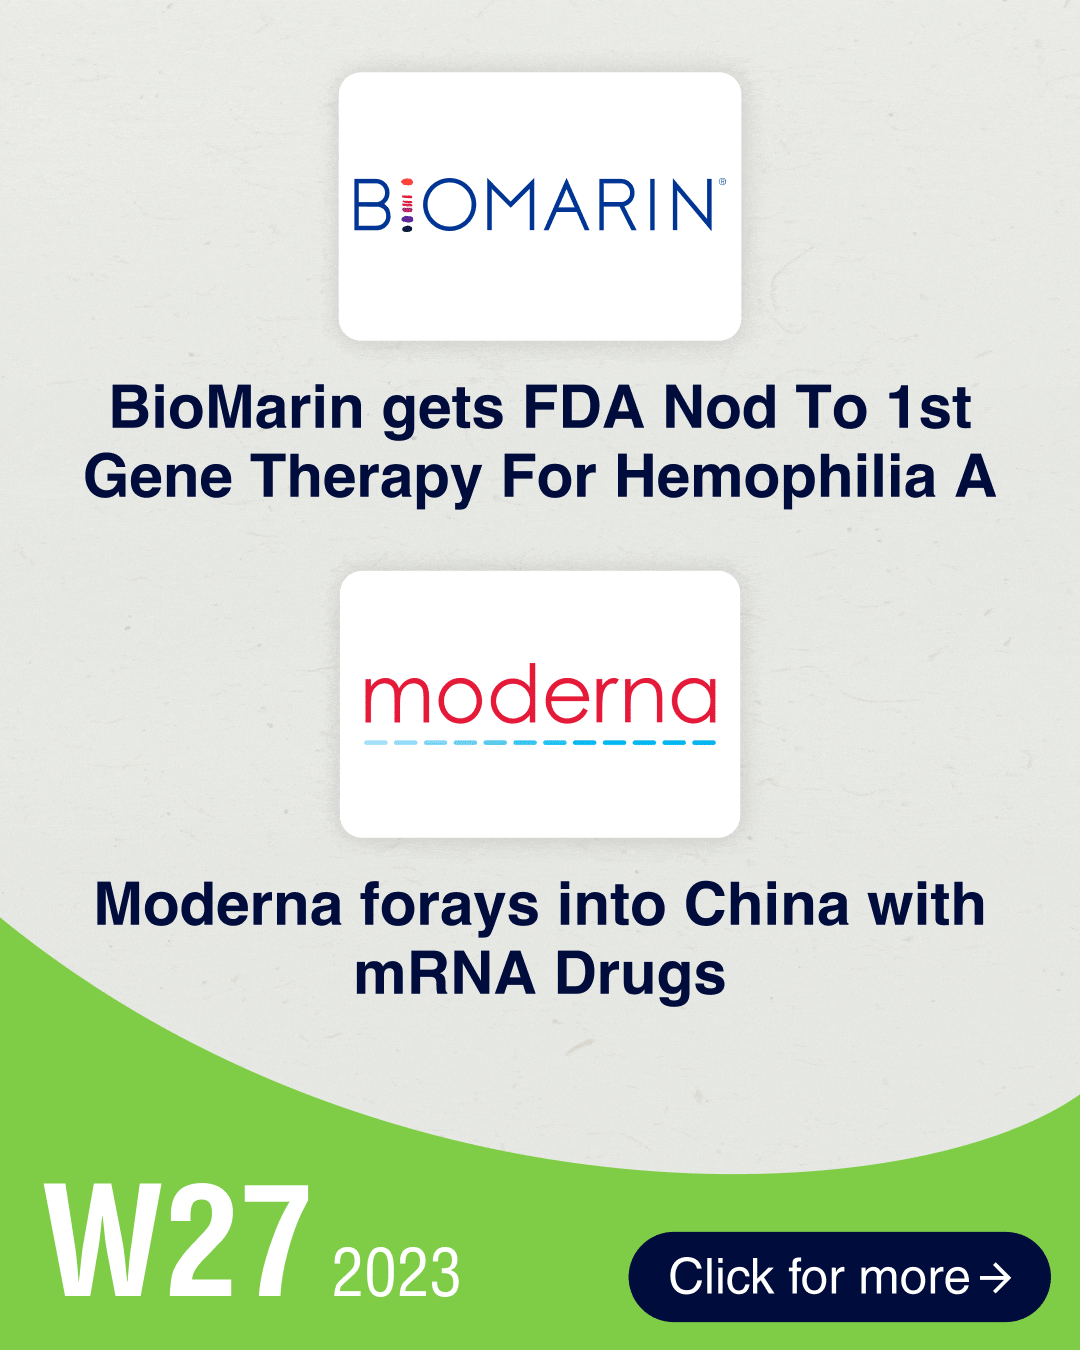 FDA okays BioMarin’s US$ 2.9 mn gene therapy for hemophilia A; Moderna forays into China with mRNA drugs